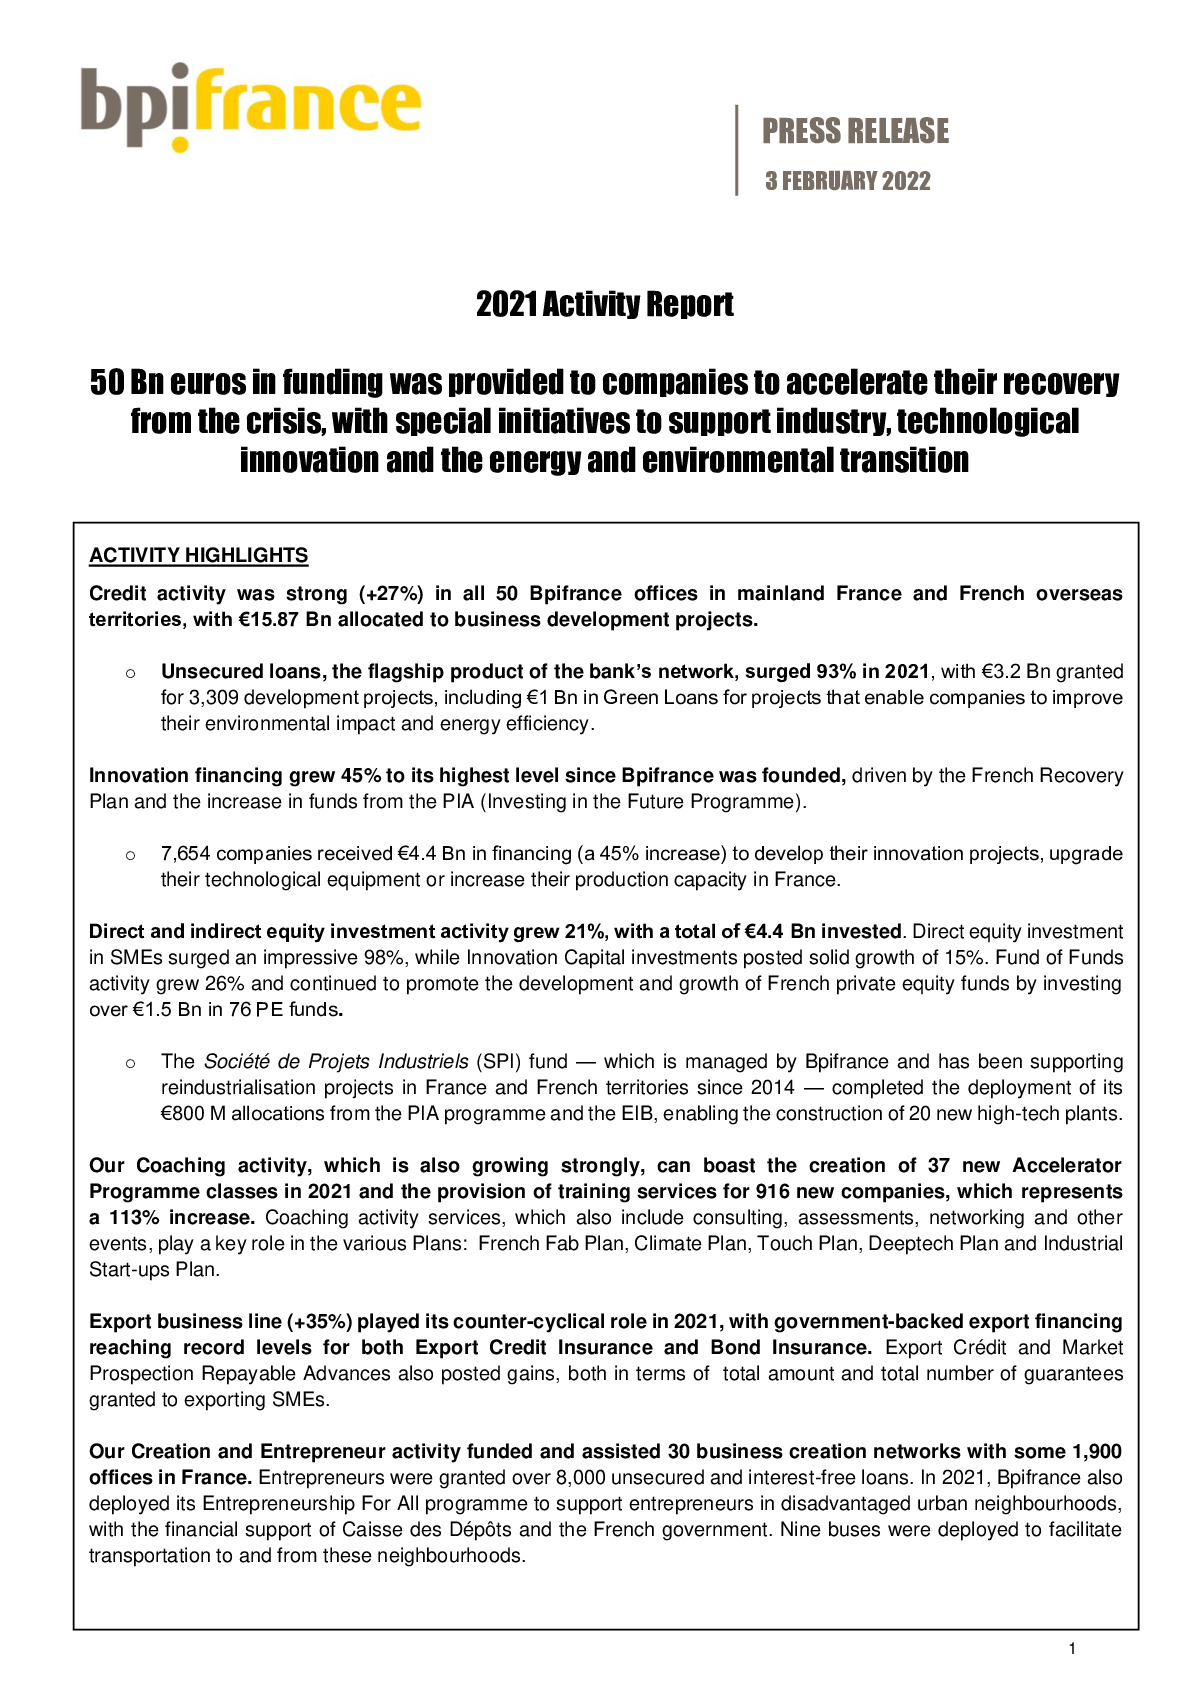 2022 02 03 – Press Release Bpifrance- Annual Report 2021_EN.pdf